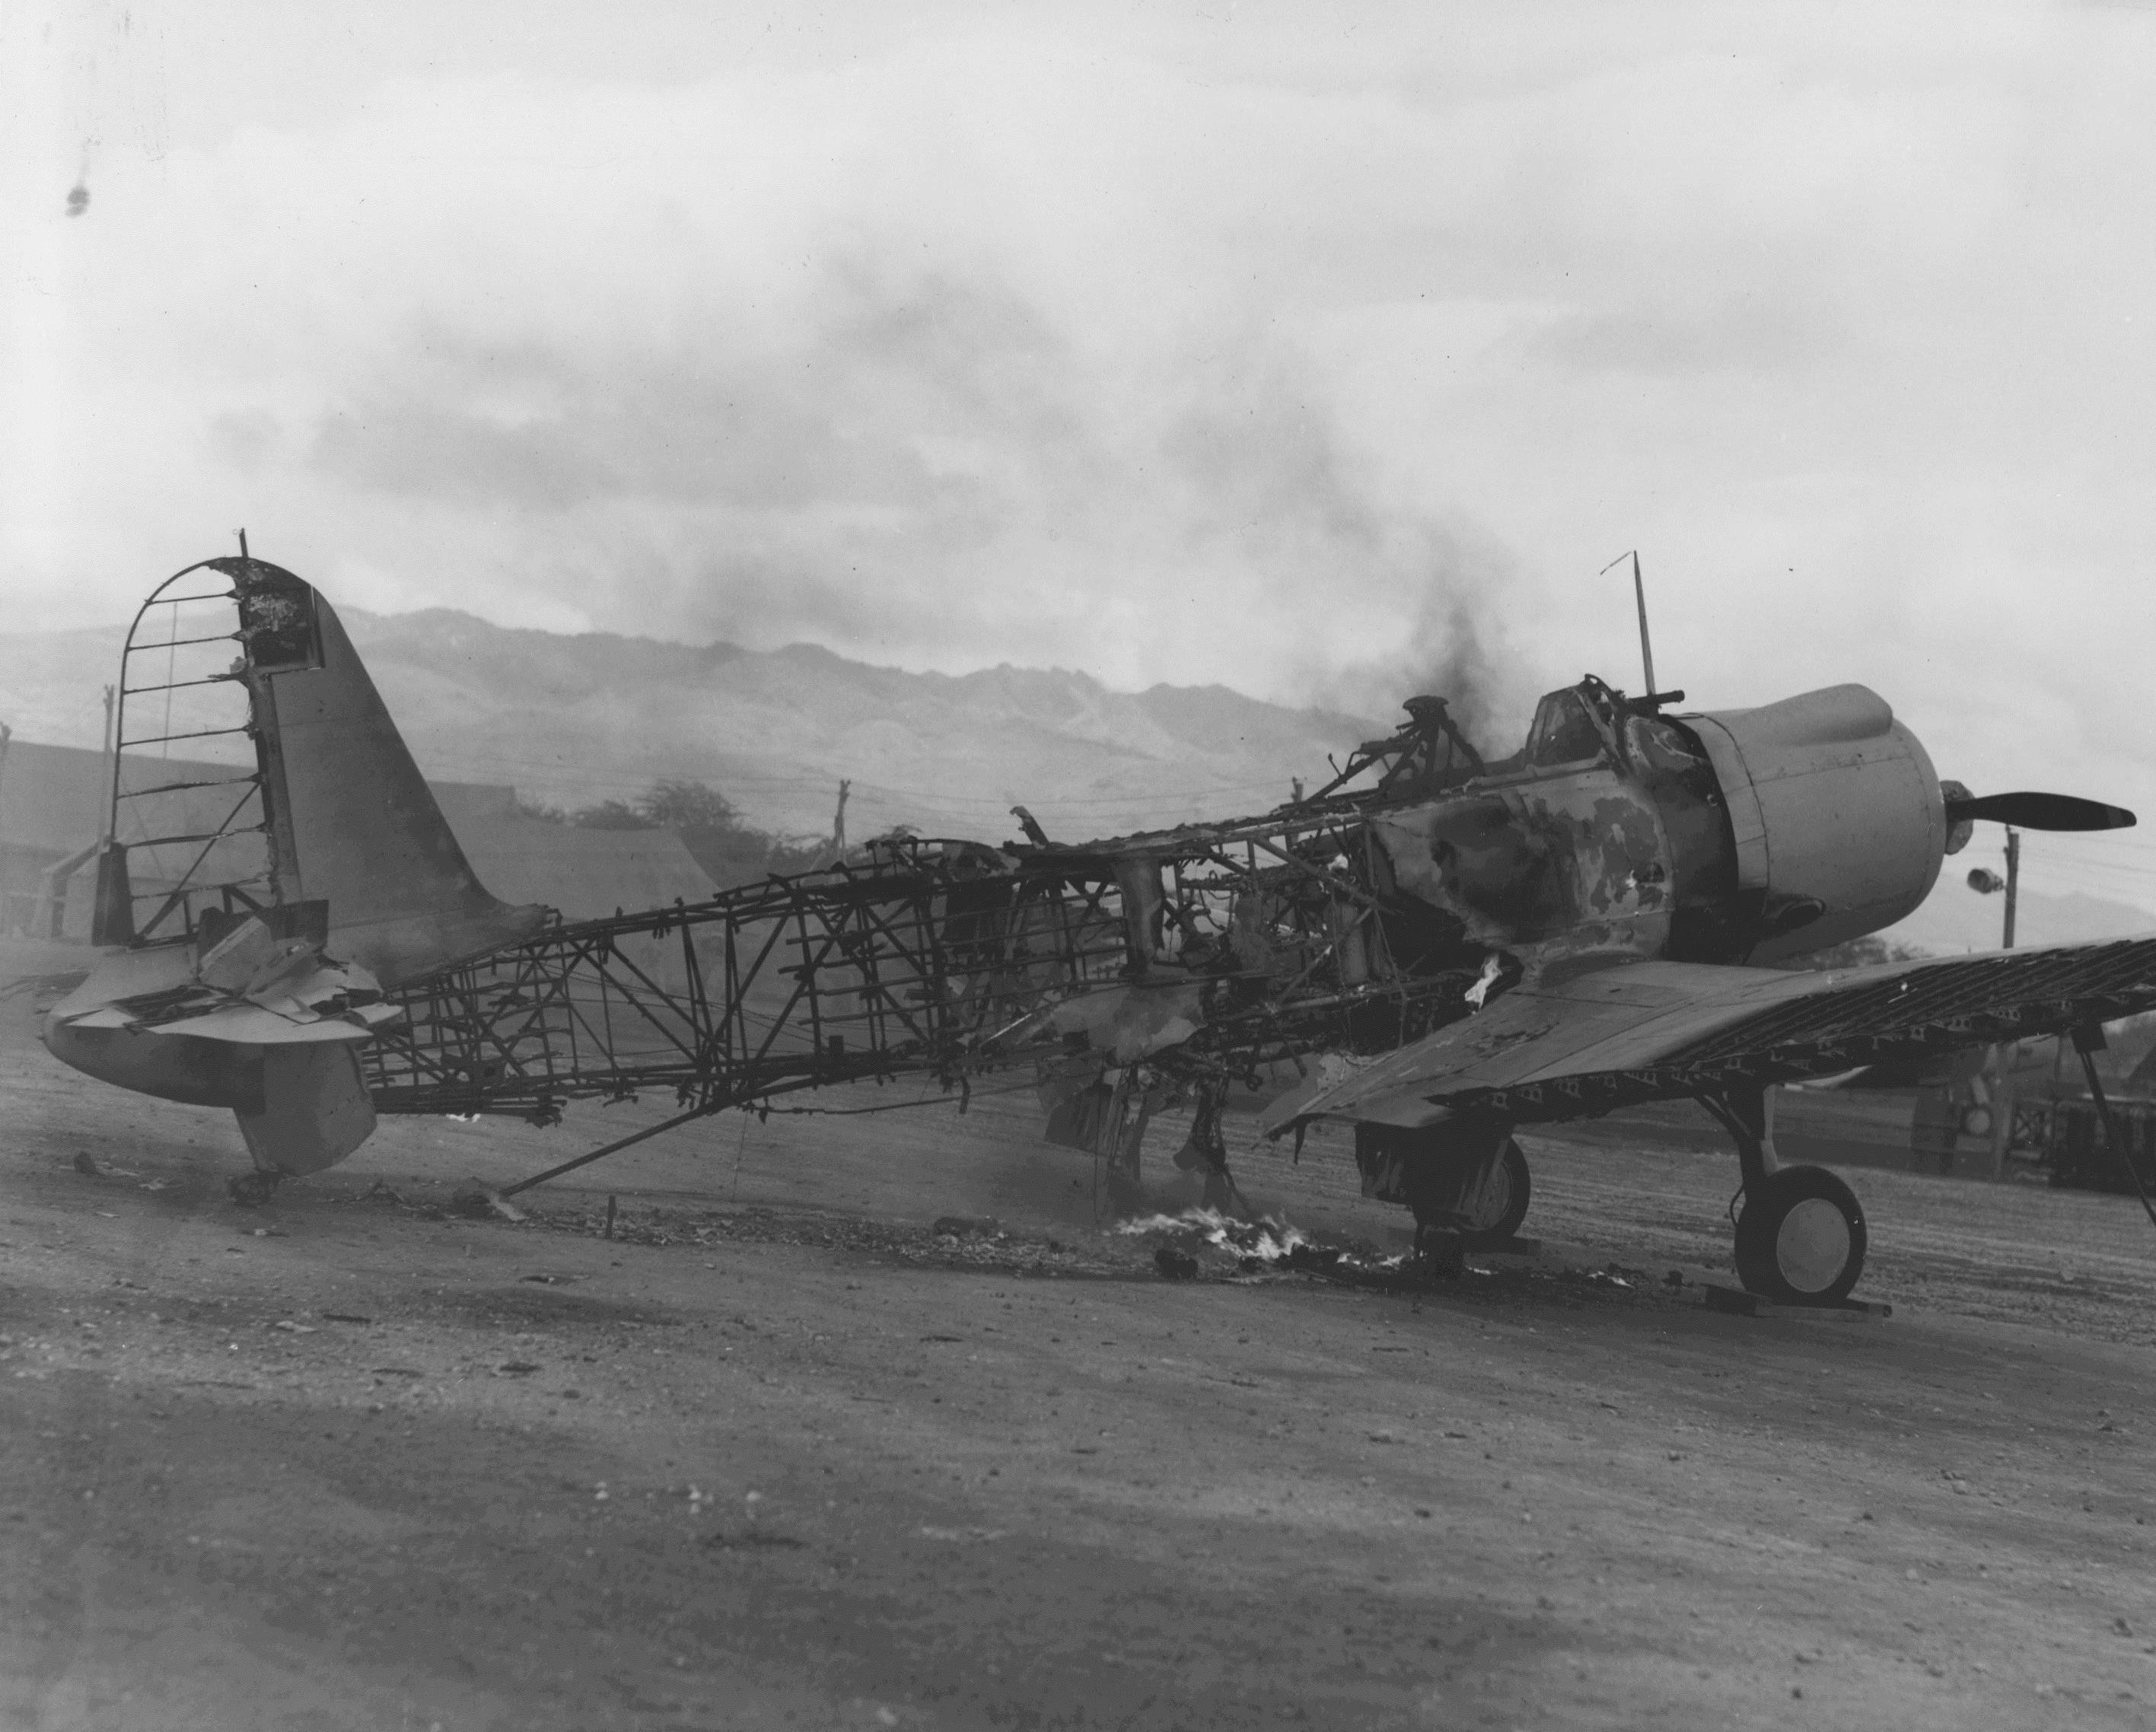 Destroyed SB2U Vindicator aircraft at Ewa Field, Oahu, US Territory of Hawaii, Dec 1941